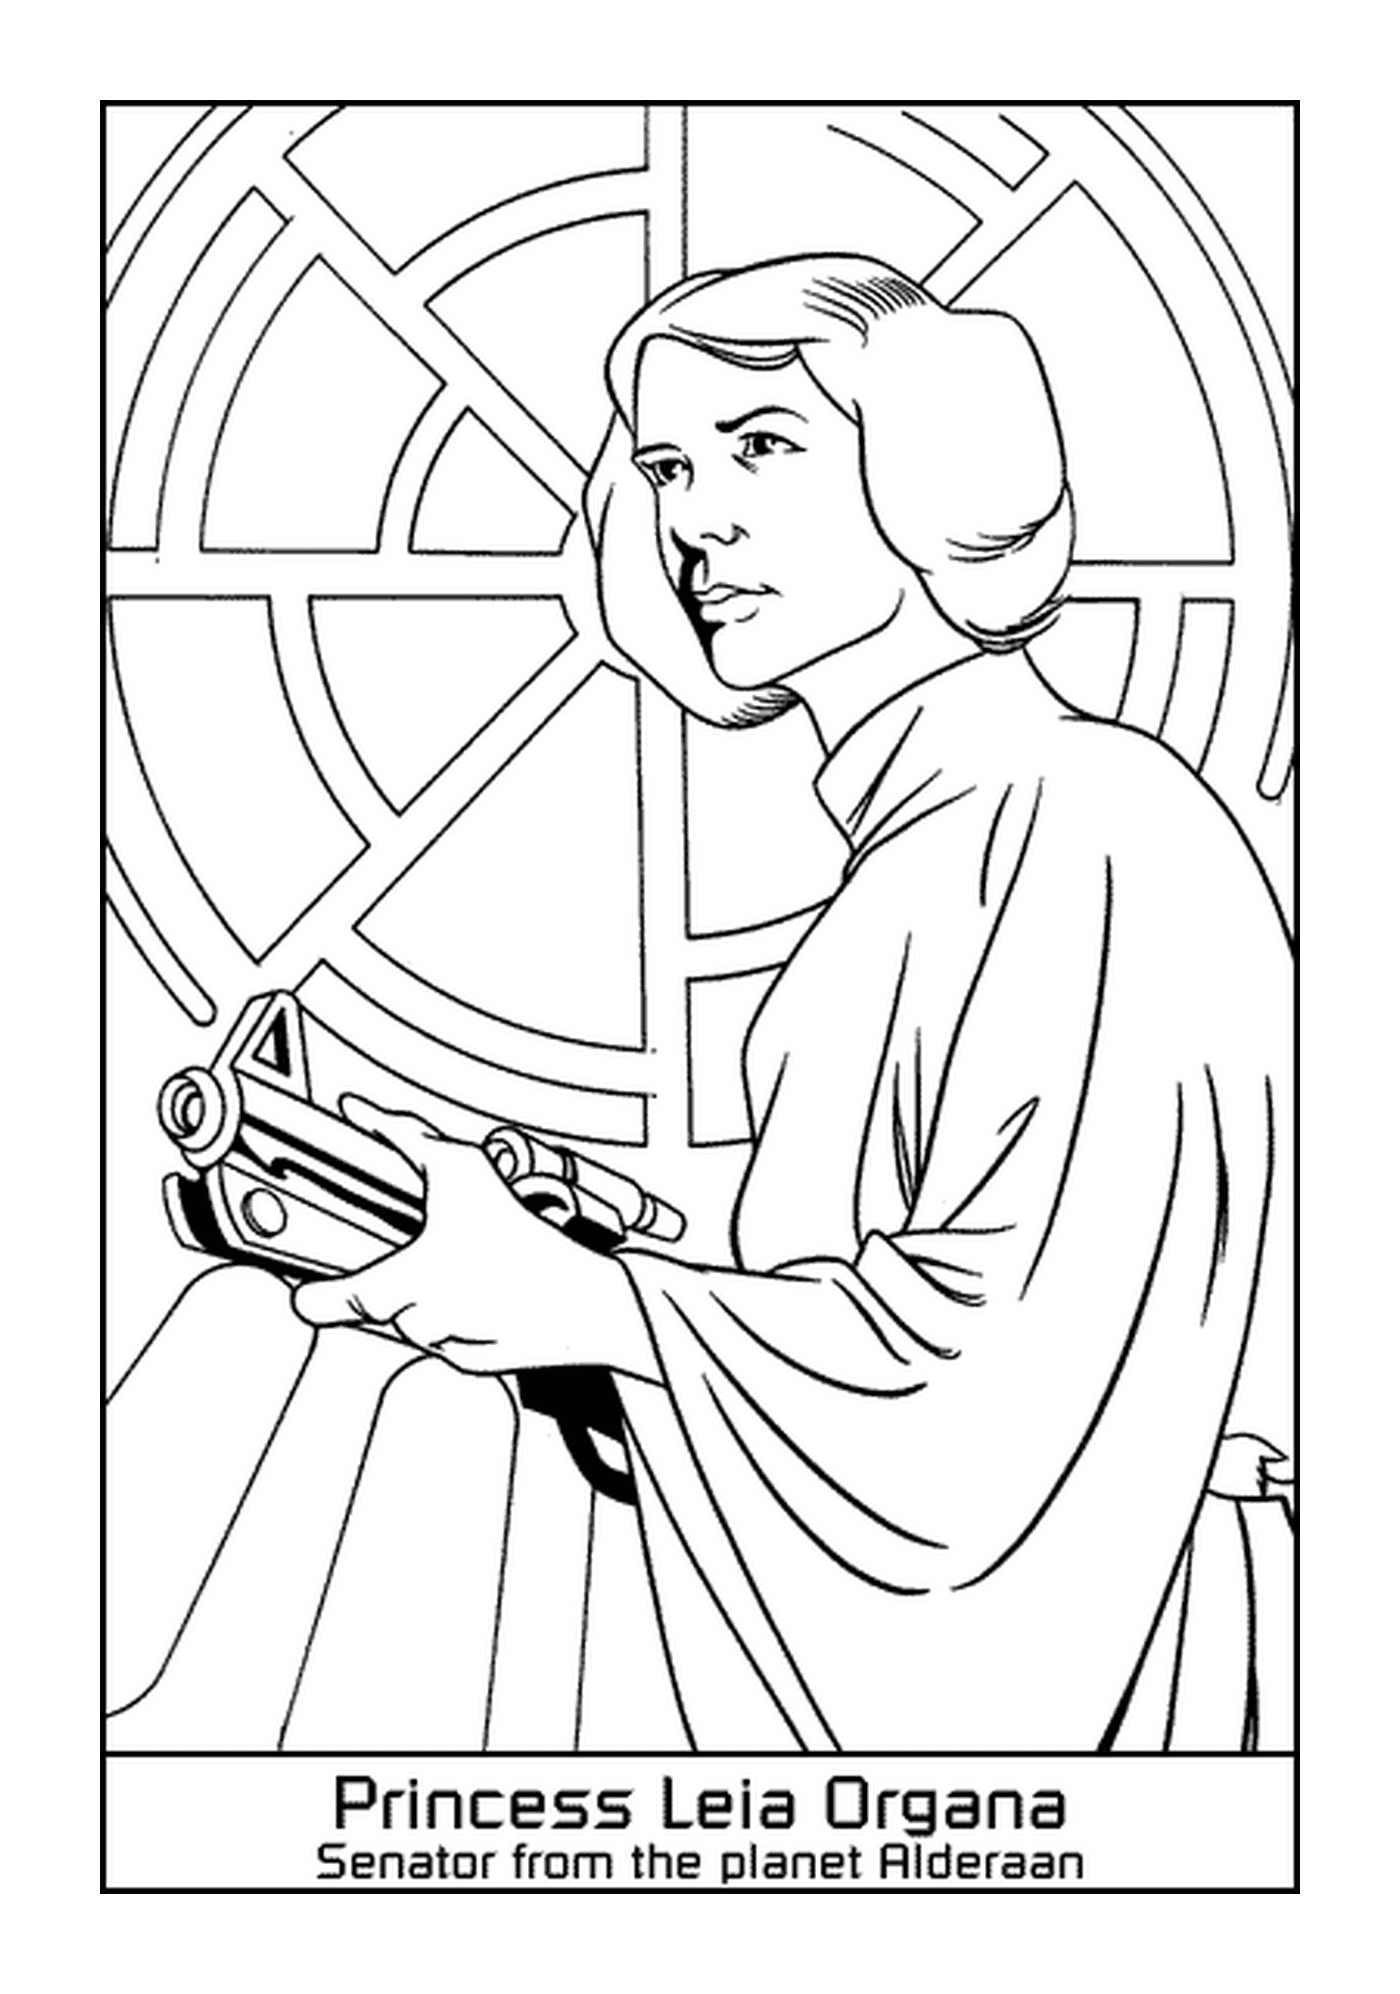   Princesse Leia Organa, vaillante 